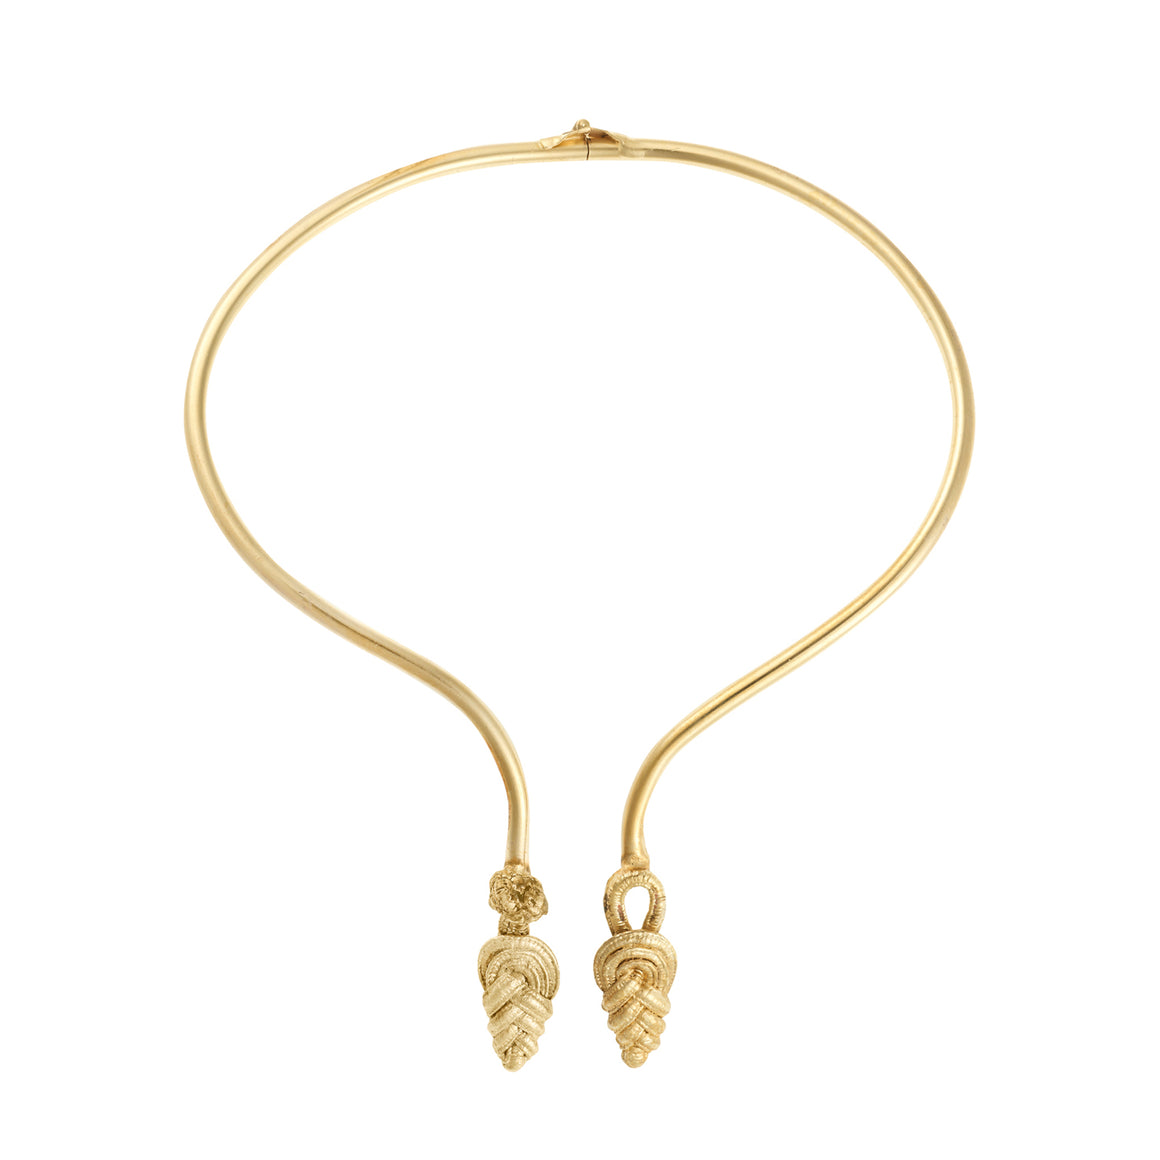 Chinese Knot Snake Necklace - Alexandra Koumba Designs